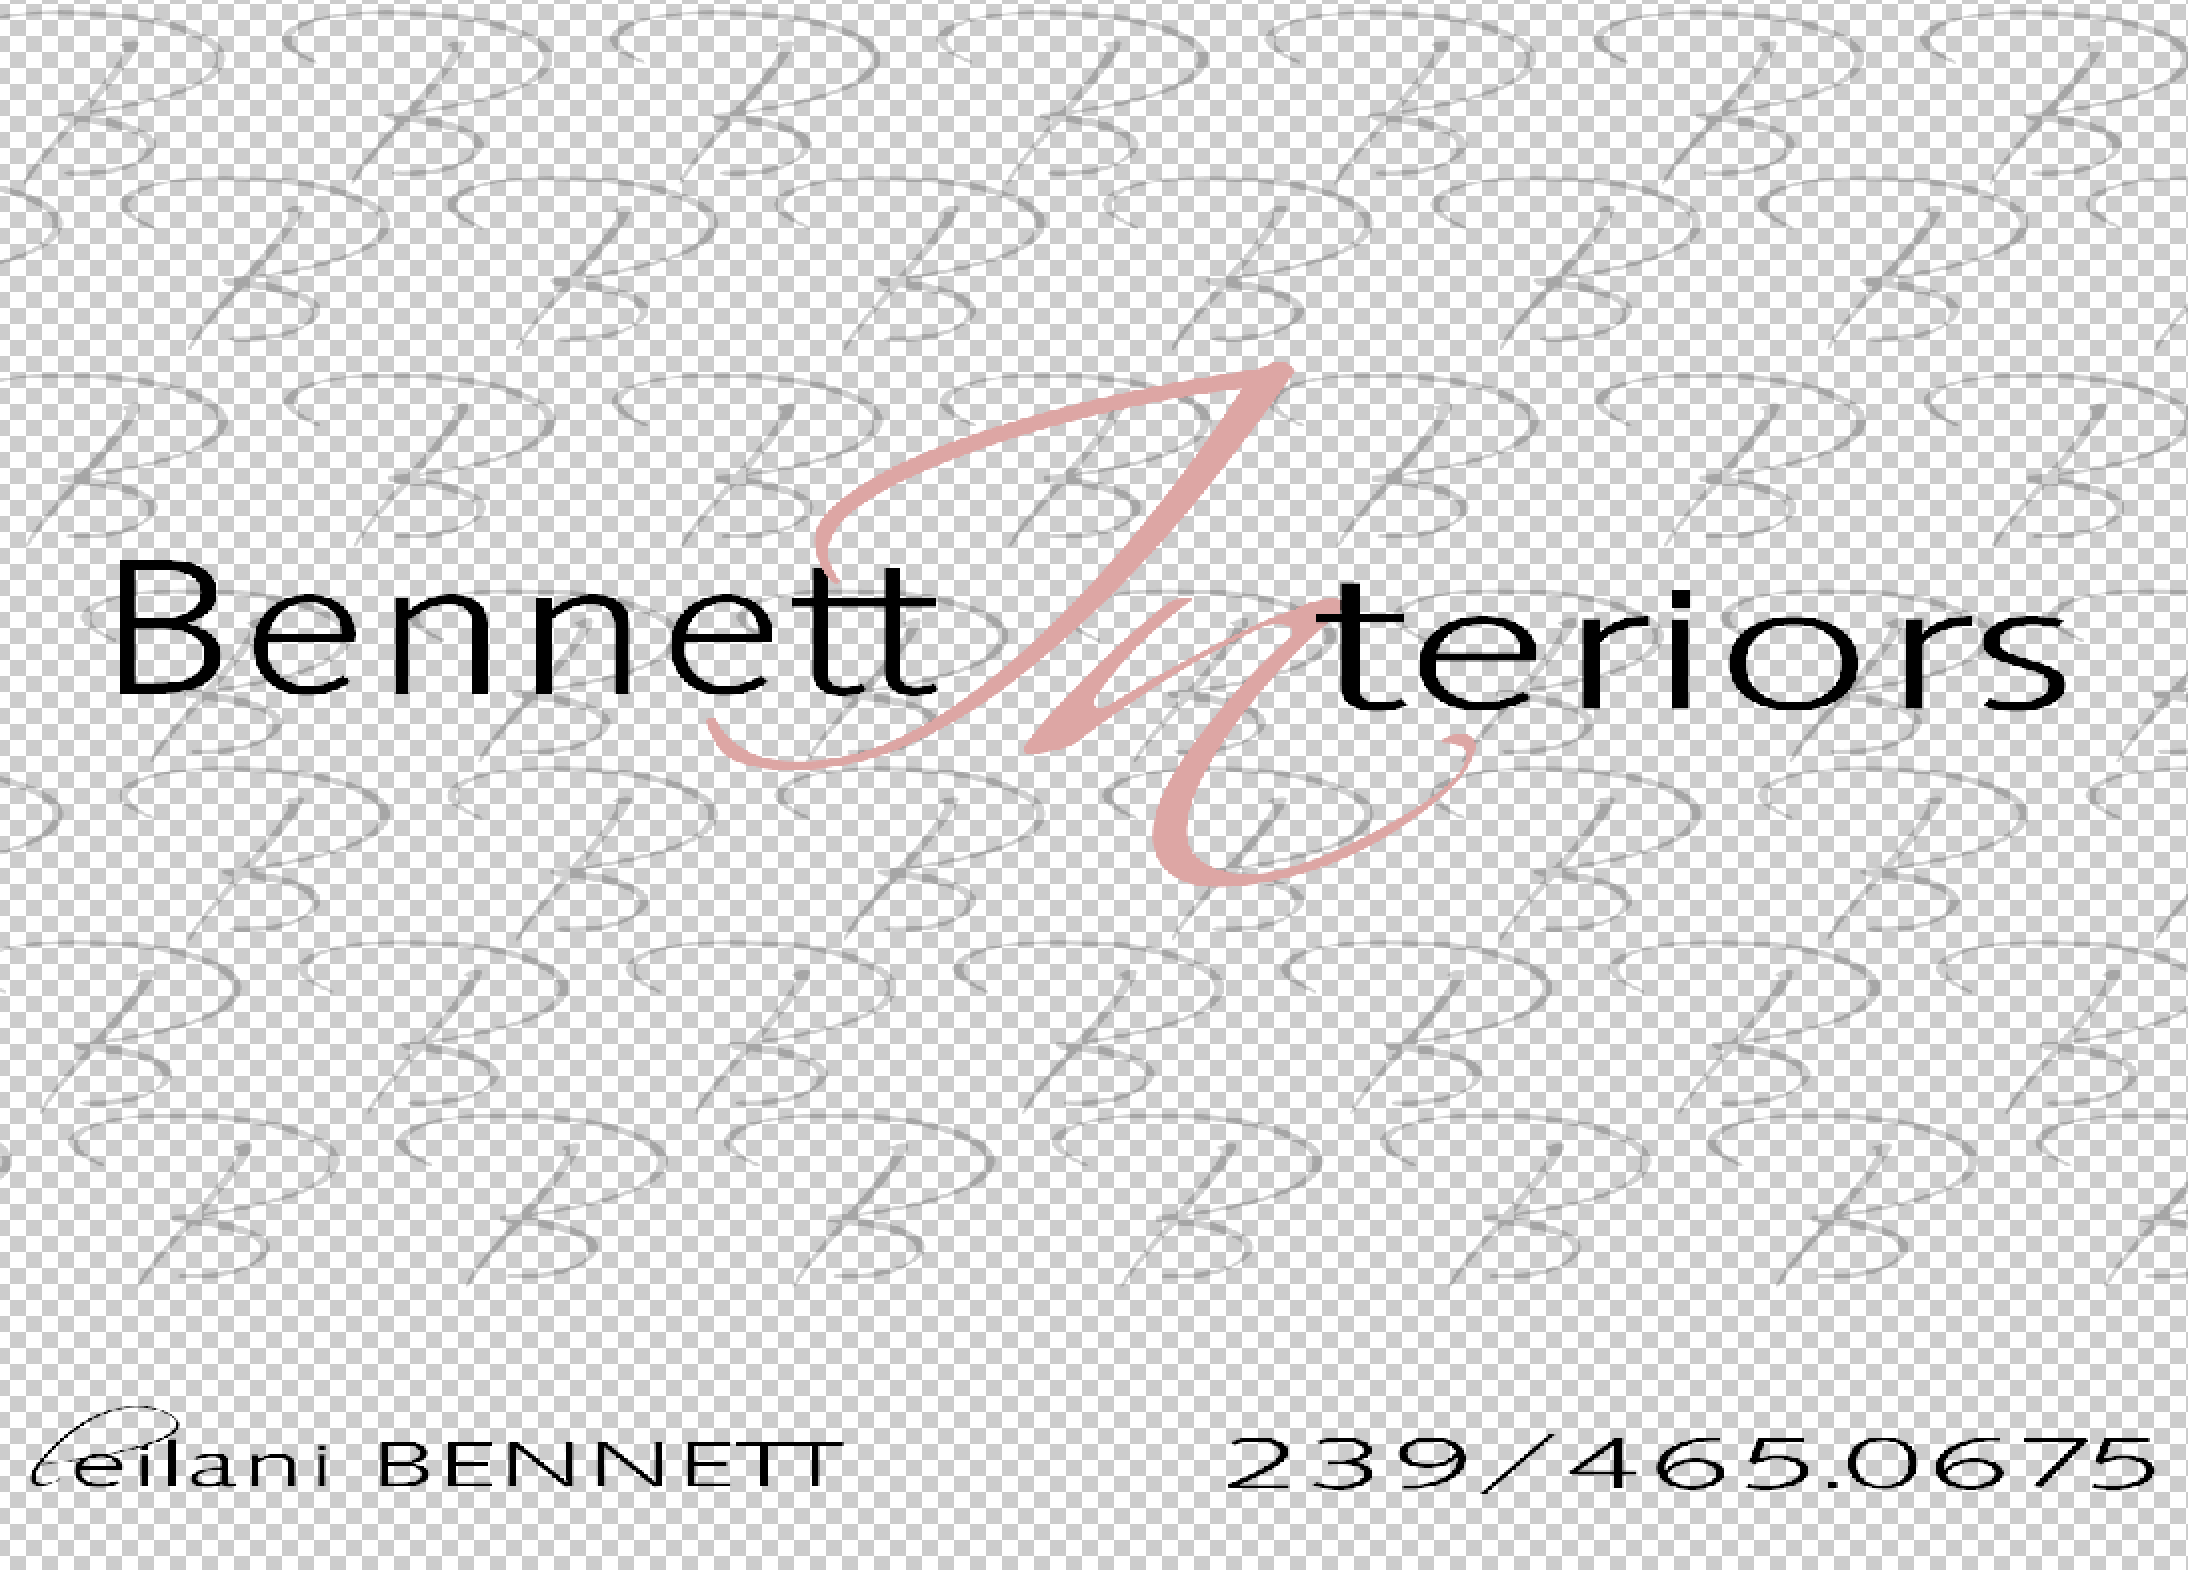 Bennett Interiors, LLC - Full Scale Design & Specializing in Custom Window Treatments Logo